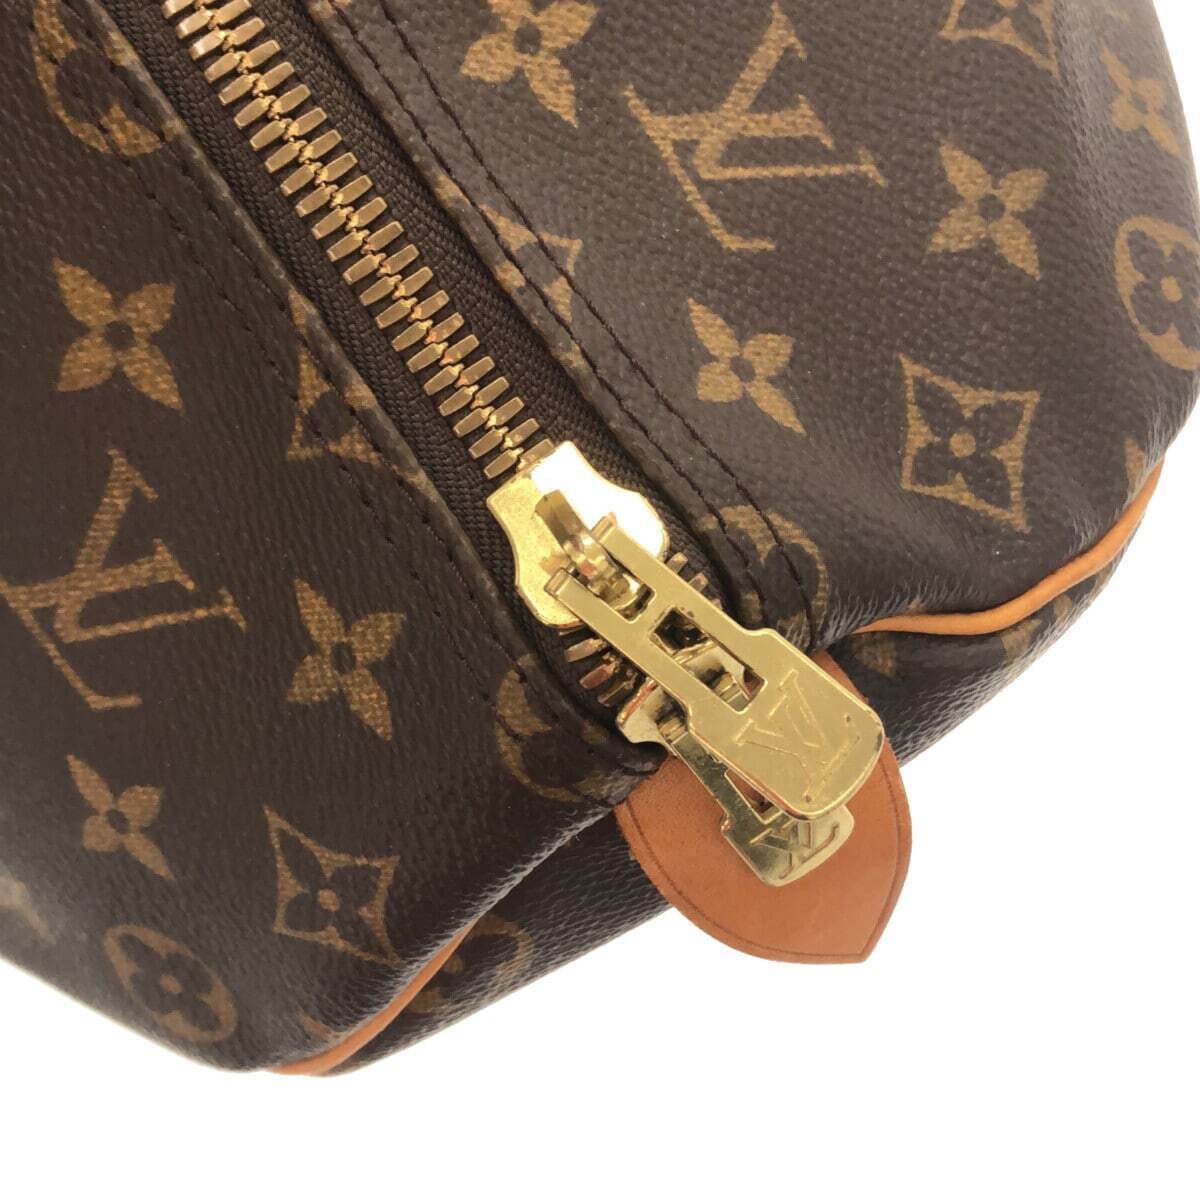 Vintage Louis Vuitton Monogram Sirius 60 suitcase-bag - Luxury